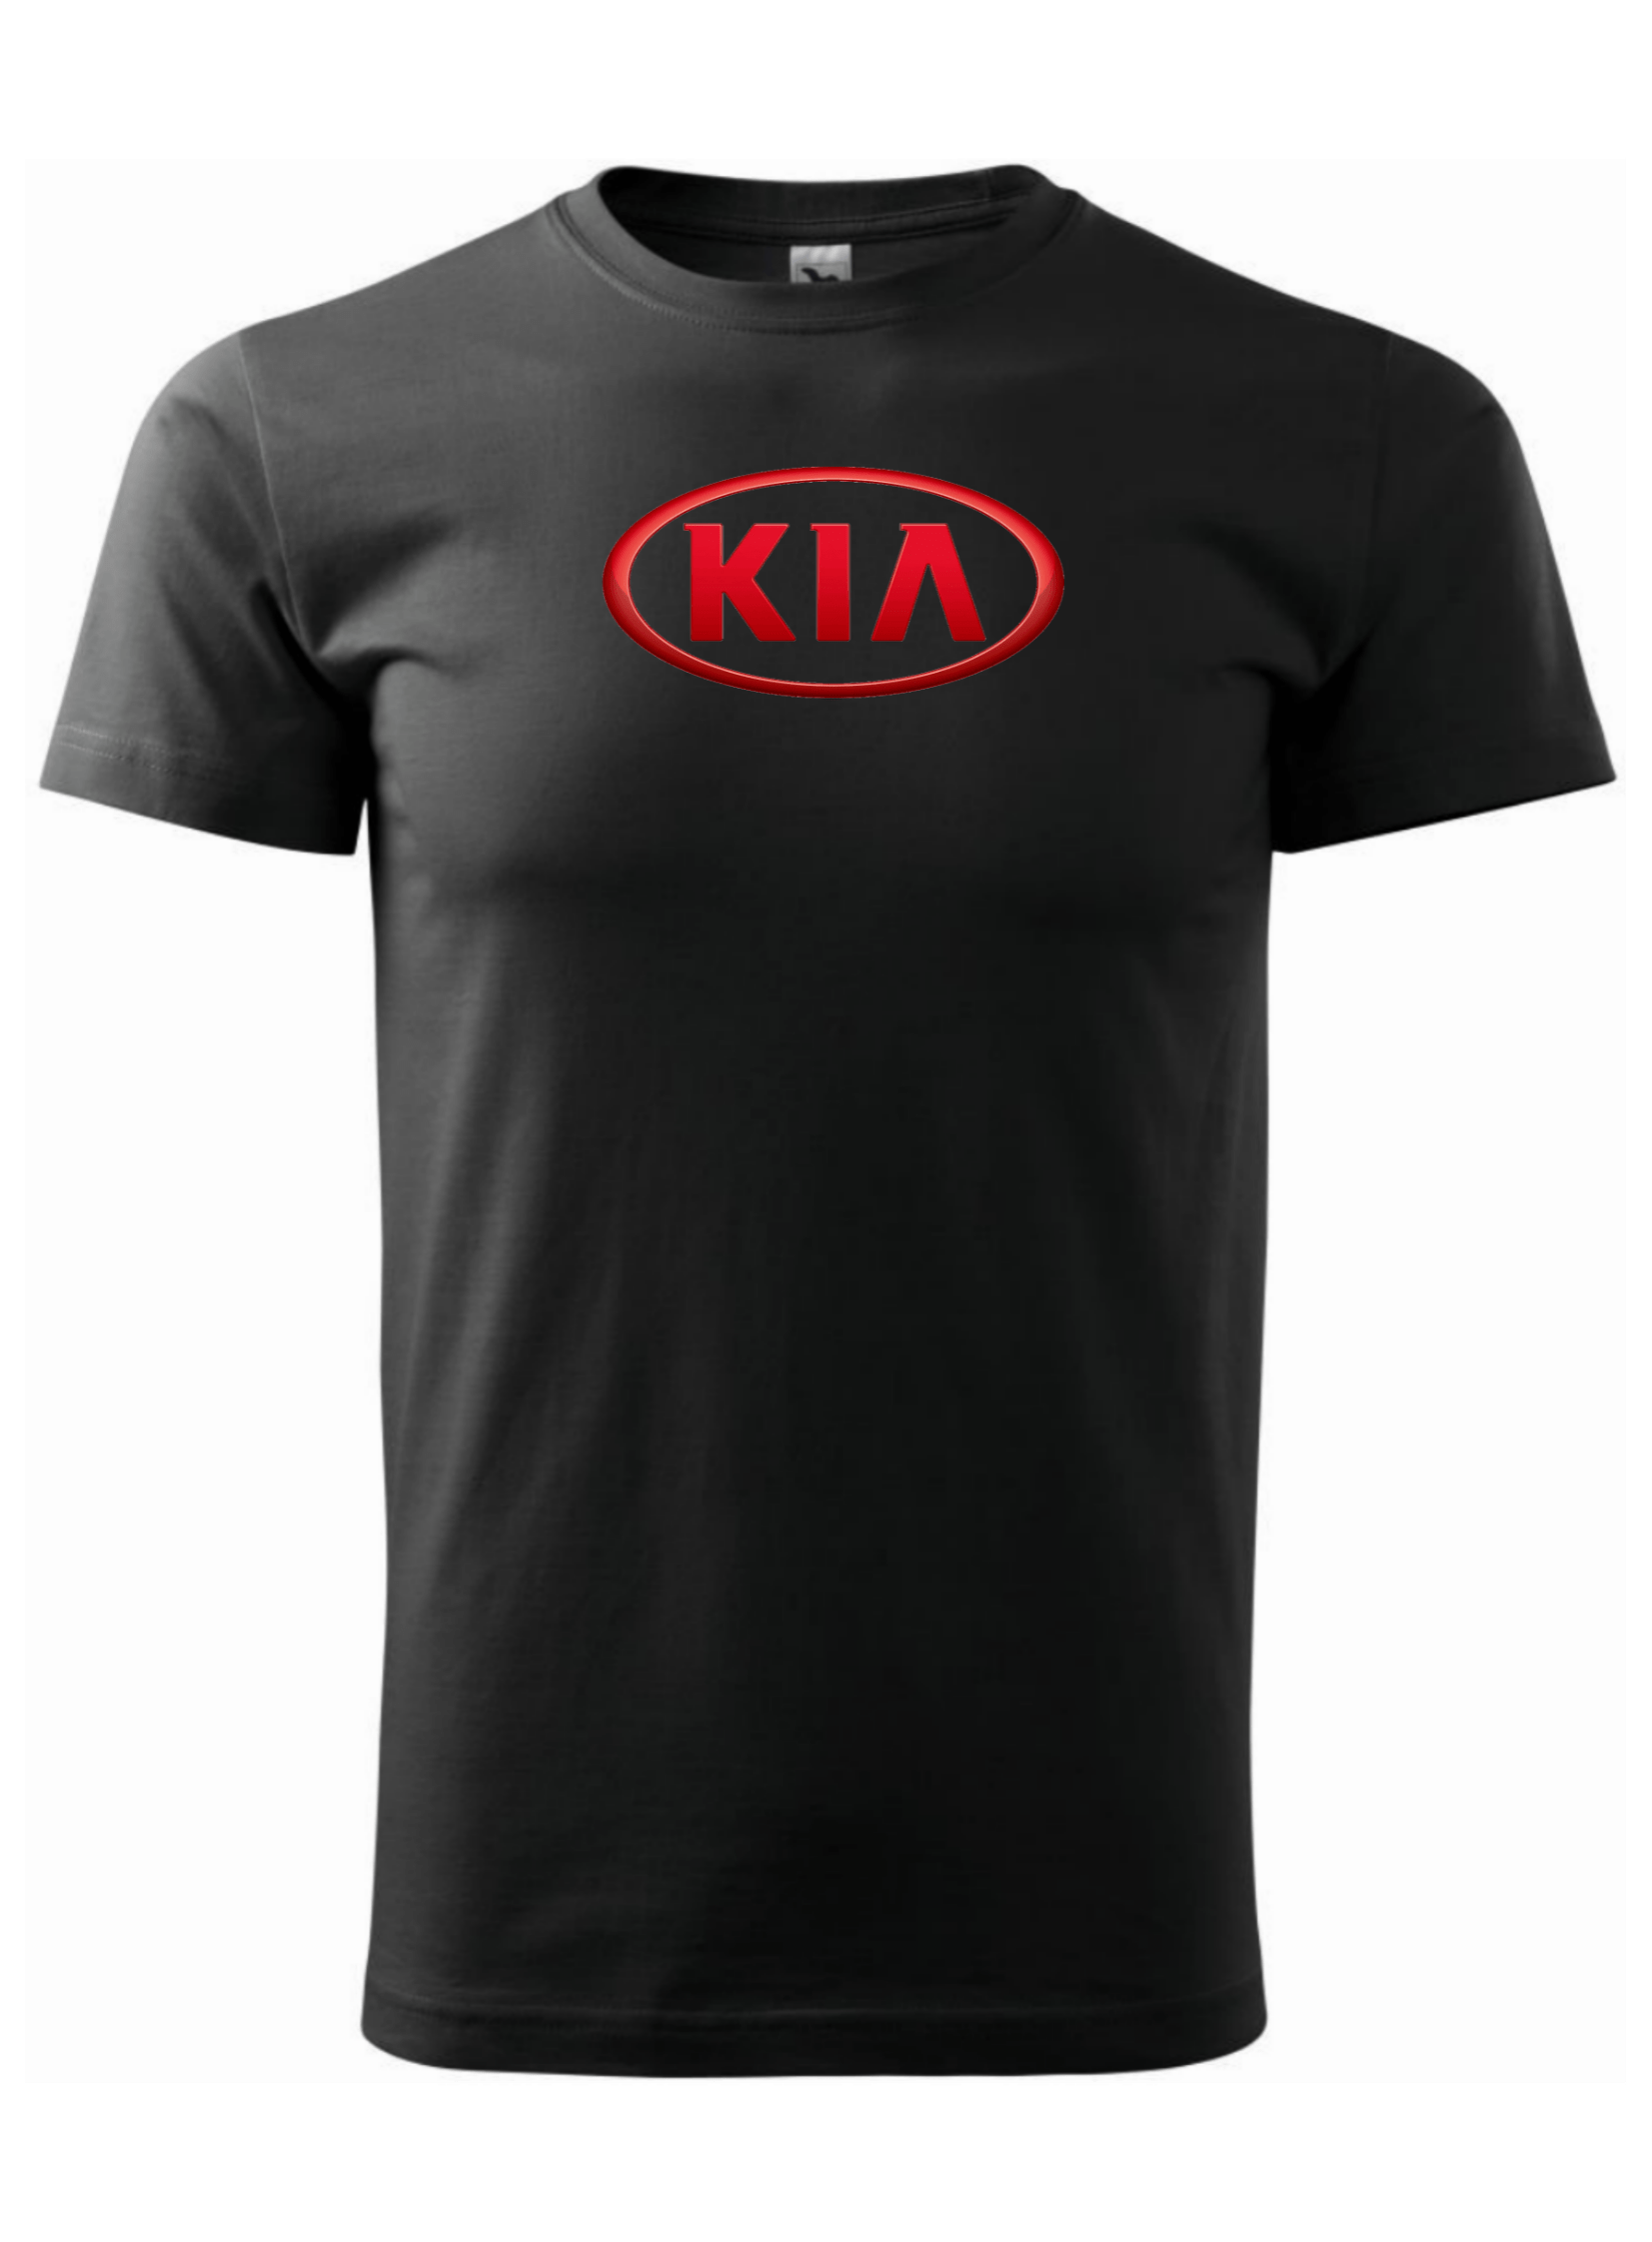 Pánské tričko s potiskem značky Kia